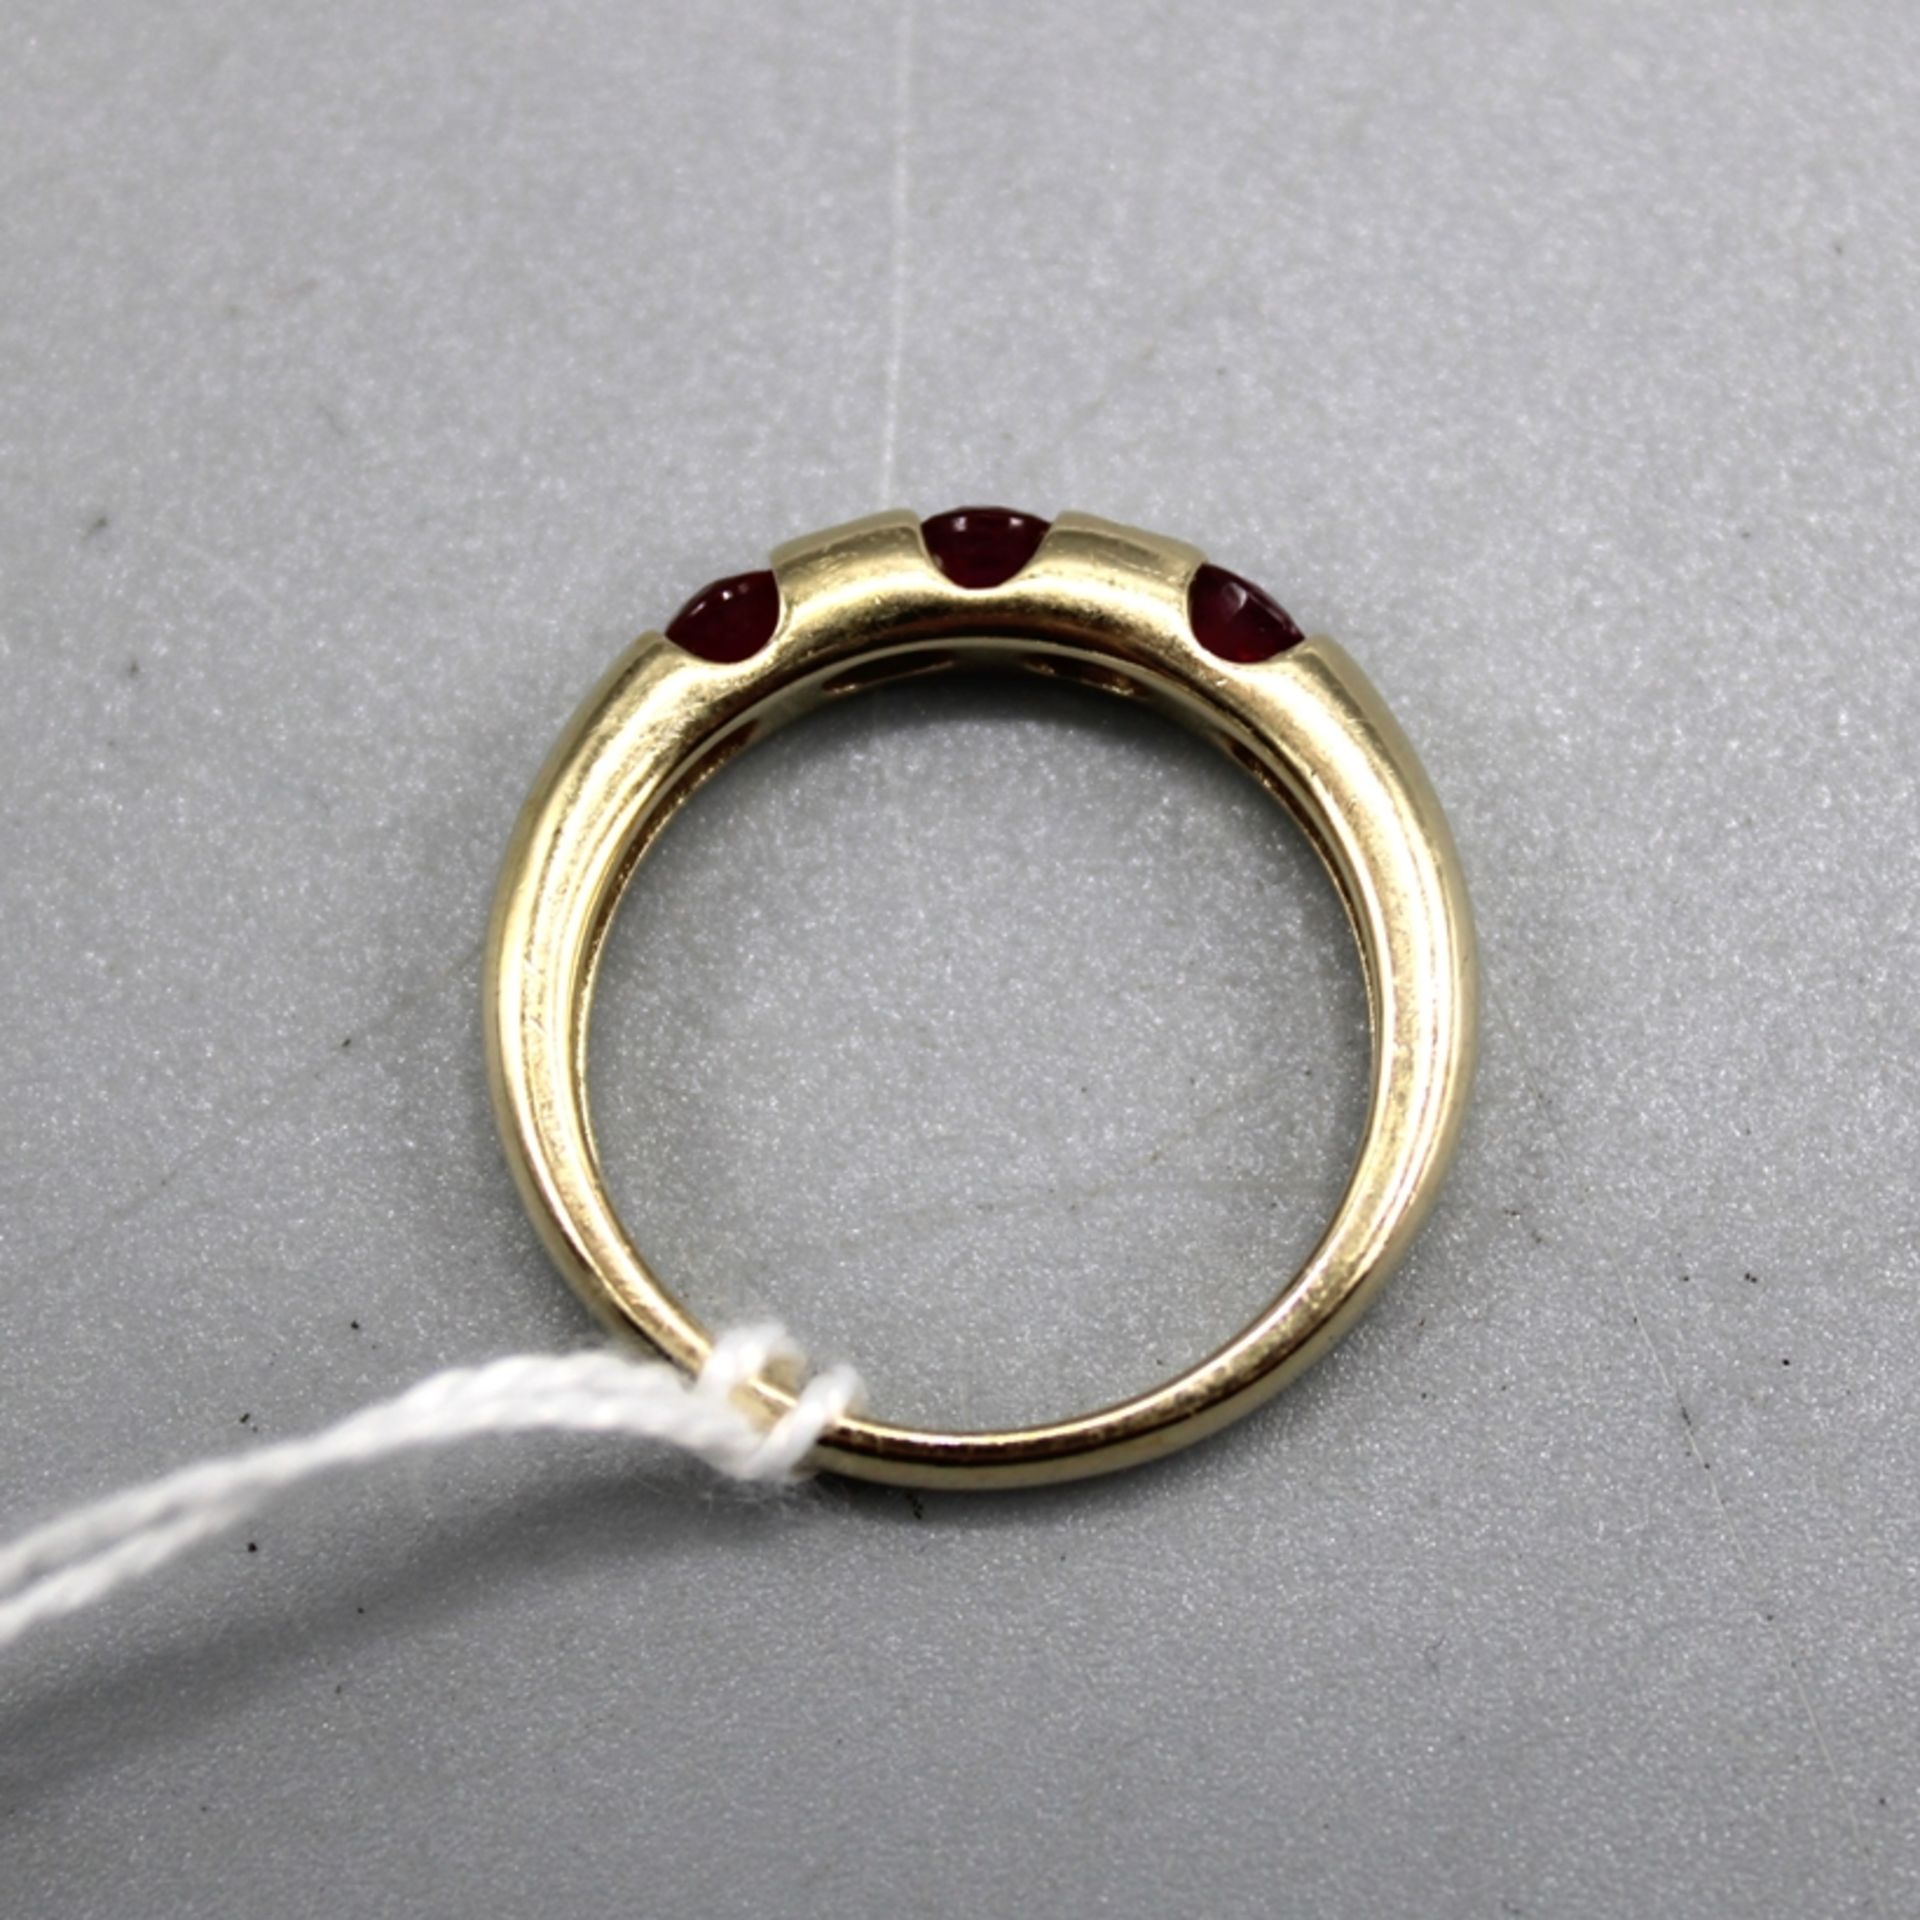 Rubin Diamant Ring 585 Gold, 3 Rubine, 2 kl. Diamanten zus. 0,05 ct., Ring Ø ca. 17,5 mm, 4 g - Image 2 of 2